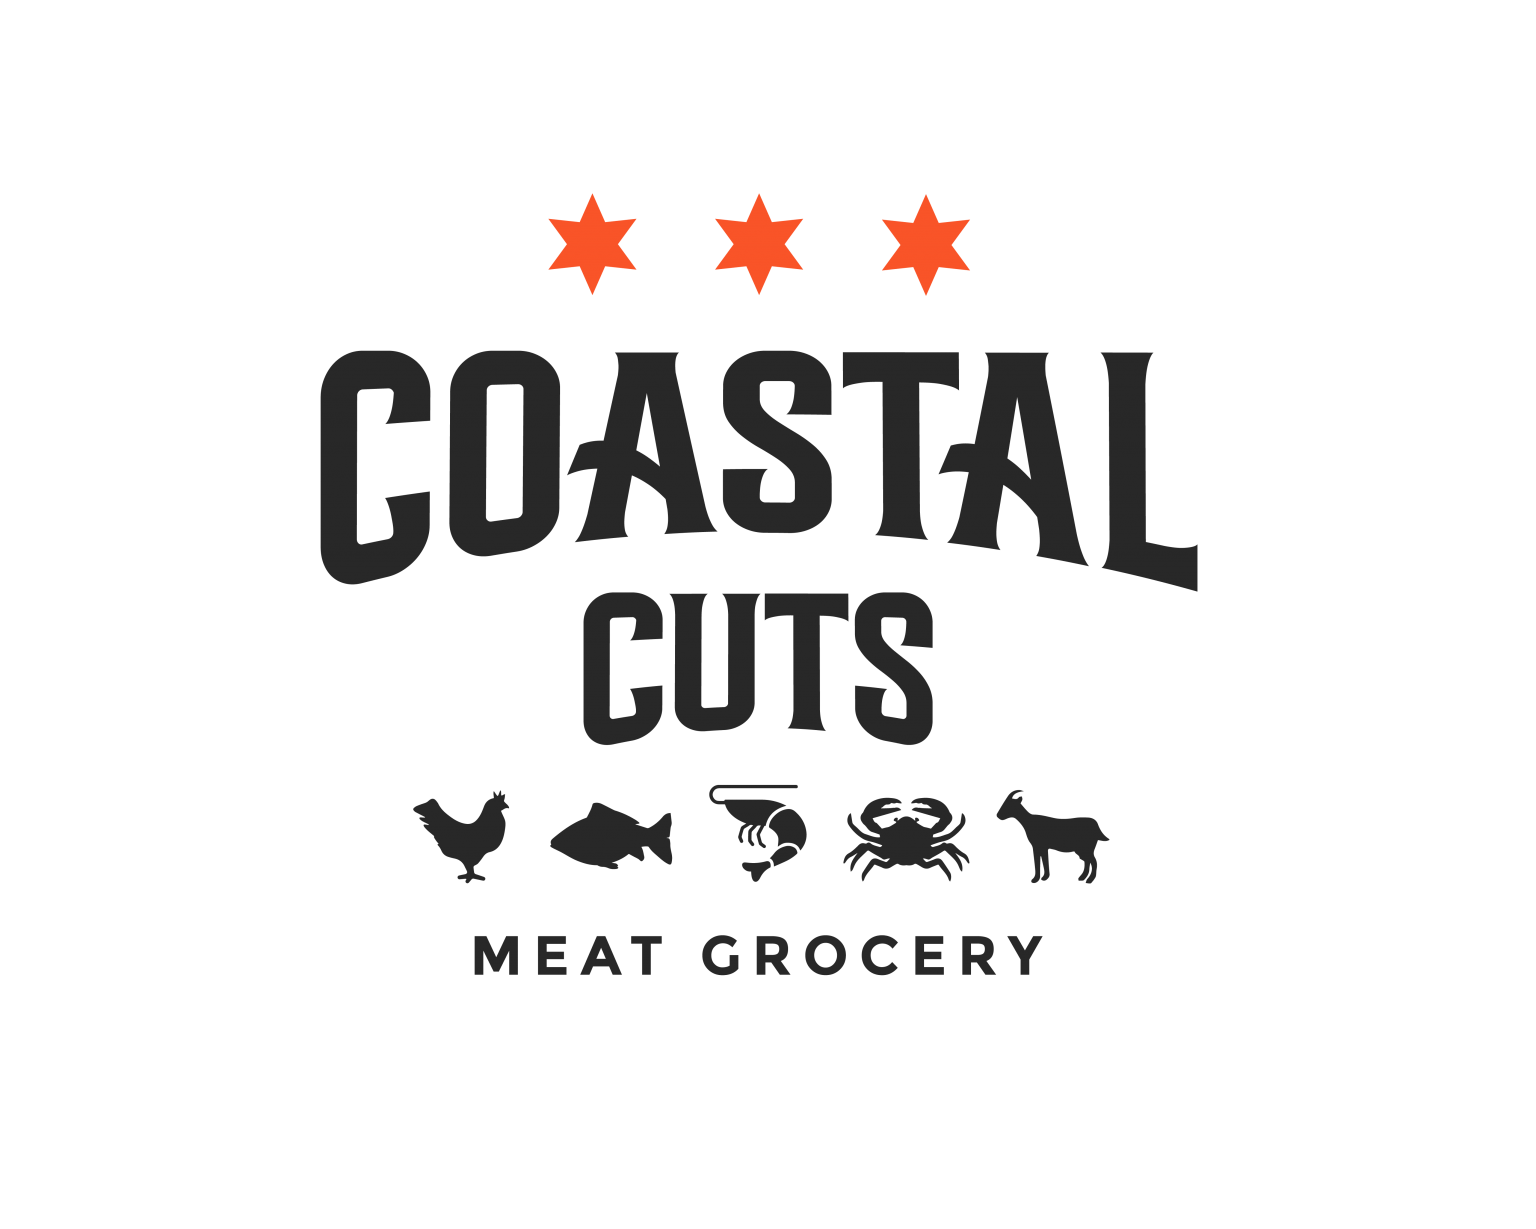 Coastal-Cuts_Logo_WhiteBackground-1536x1229-1.png